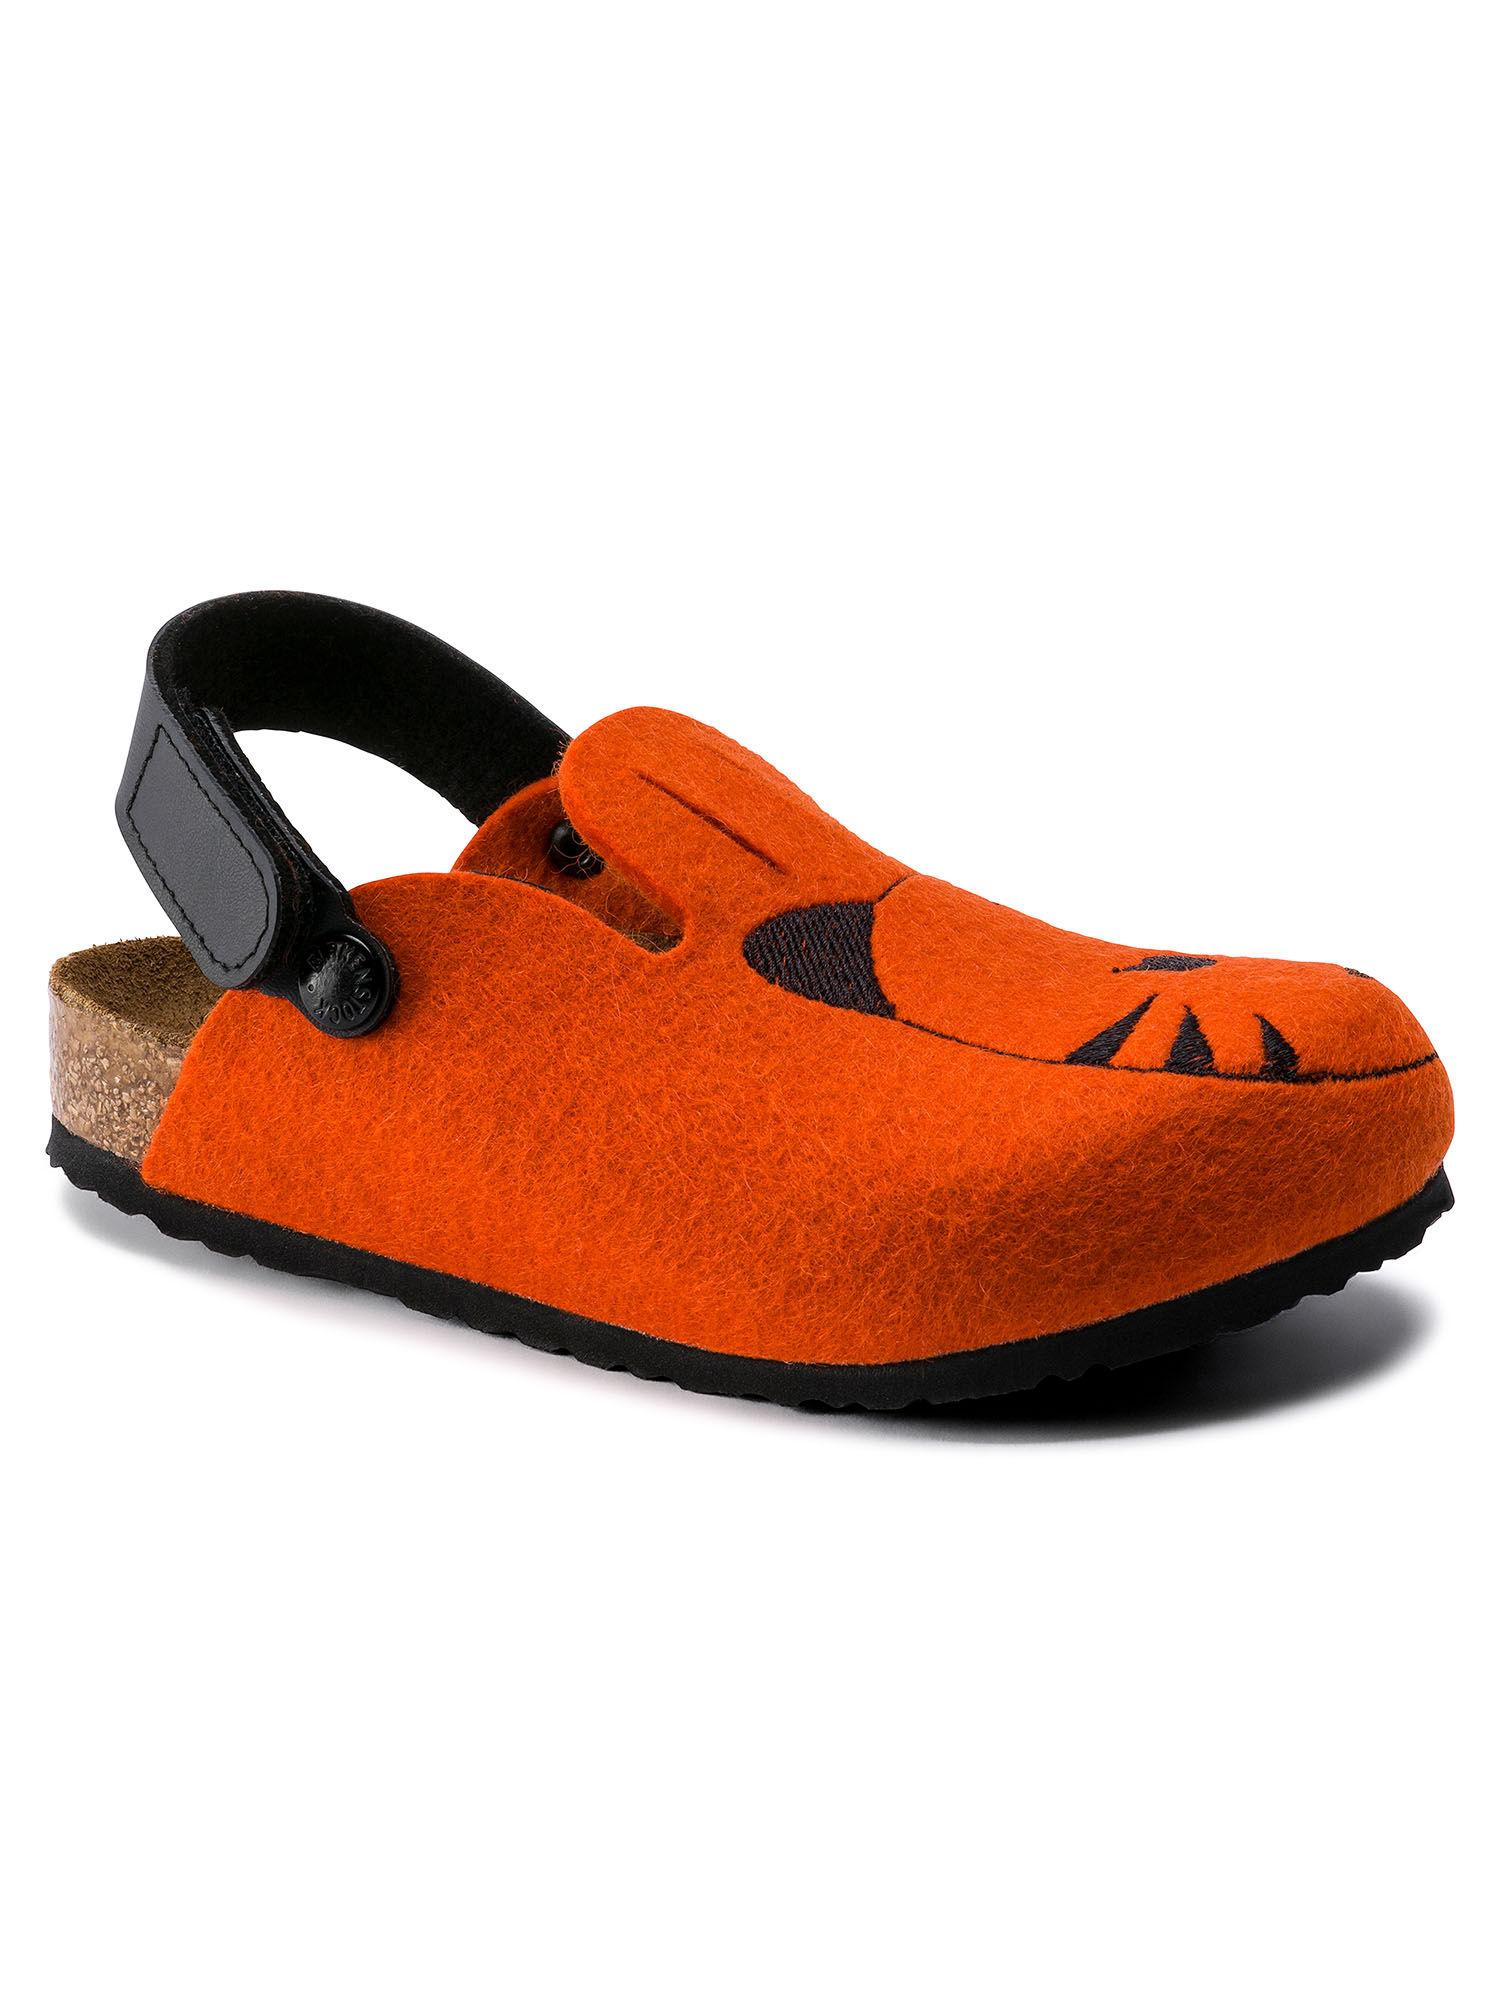 zimba kids wool felt narrow orange boys sandals